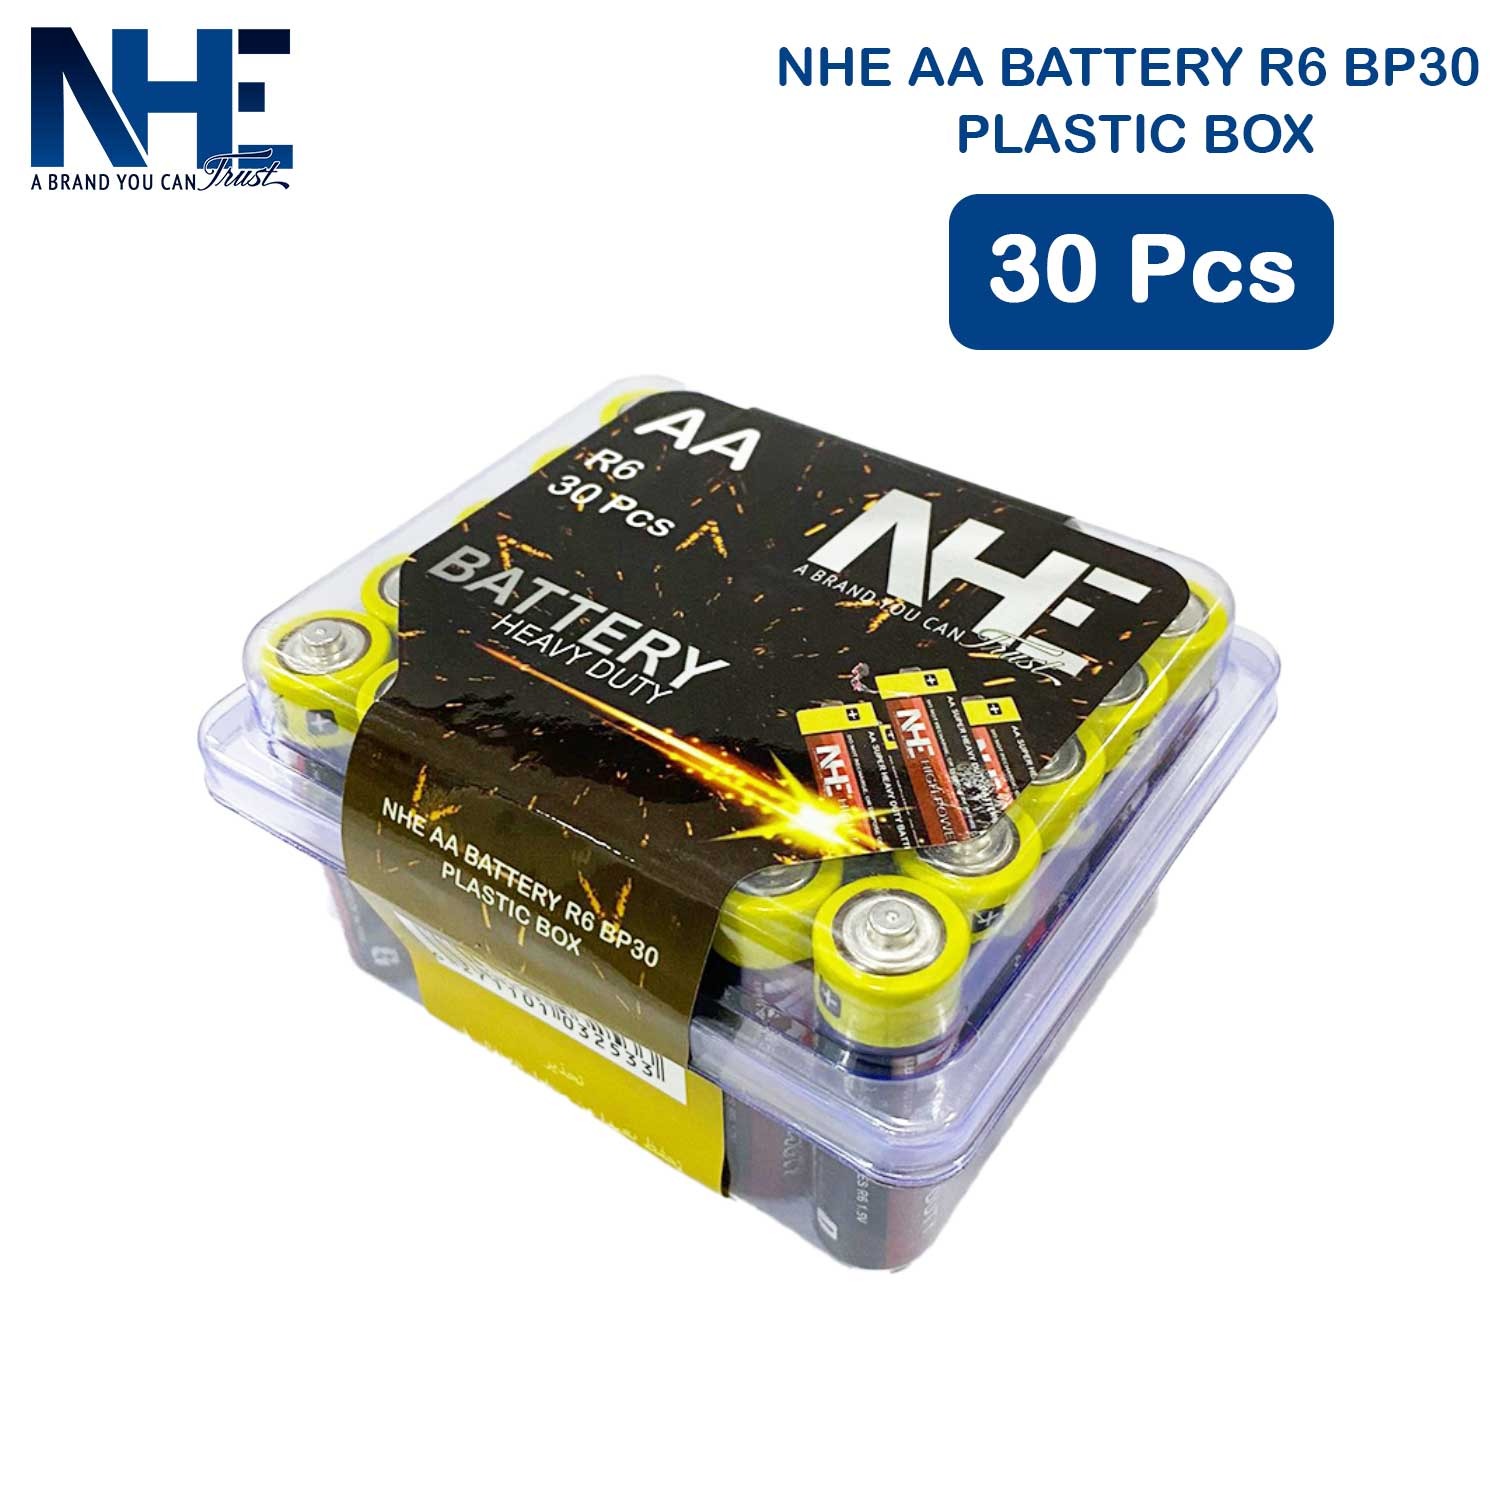 NHE AA Battery R6 BP30 Plastic Box